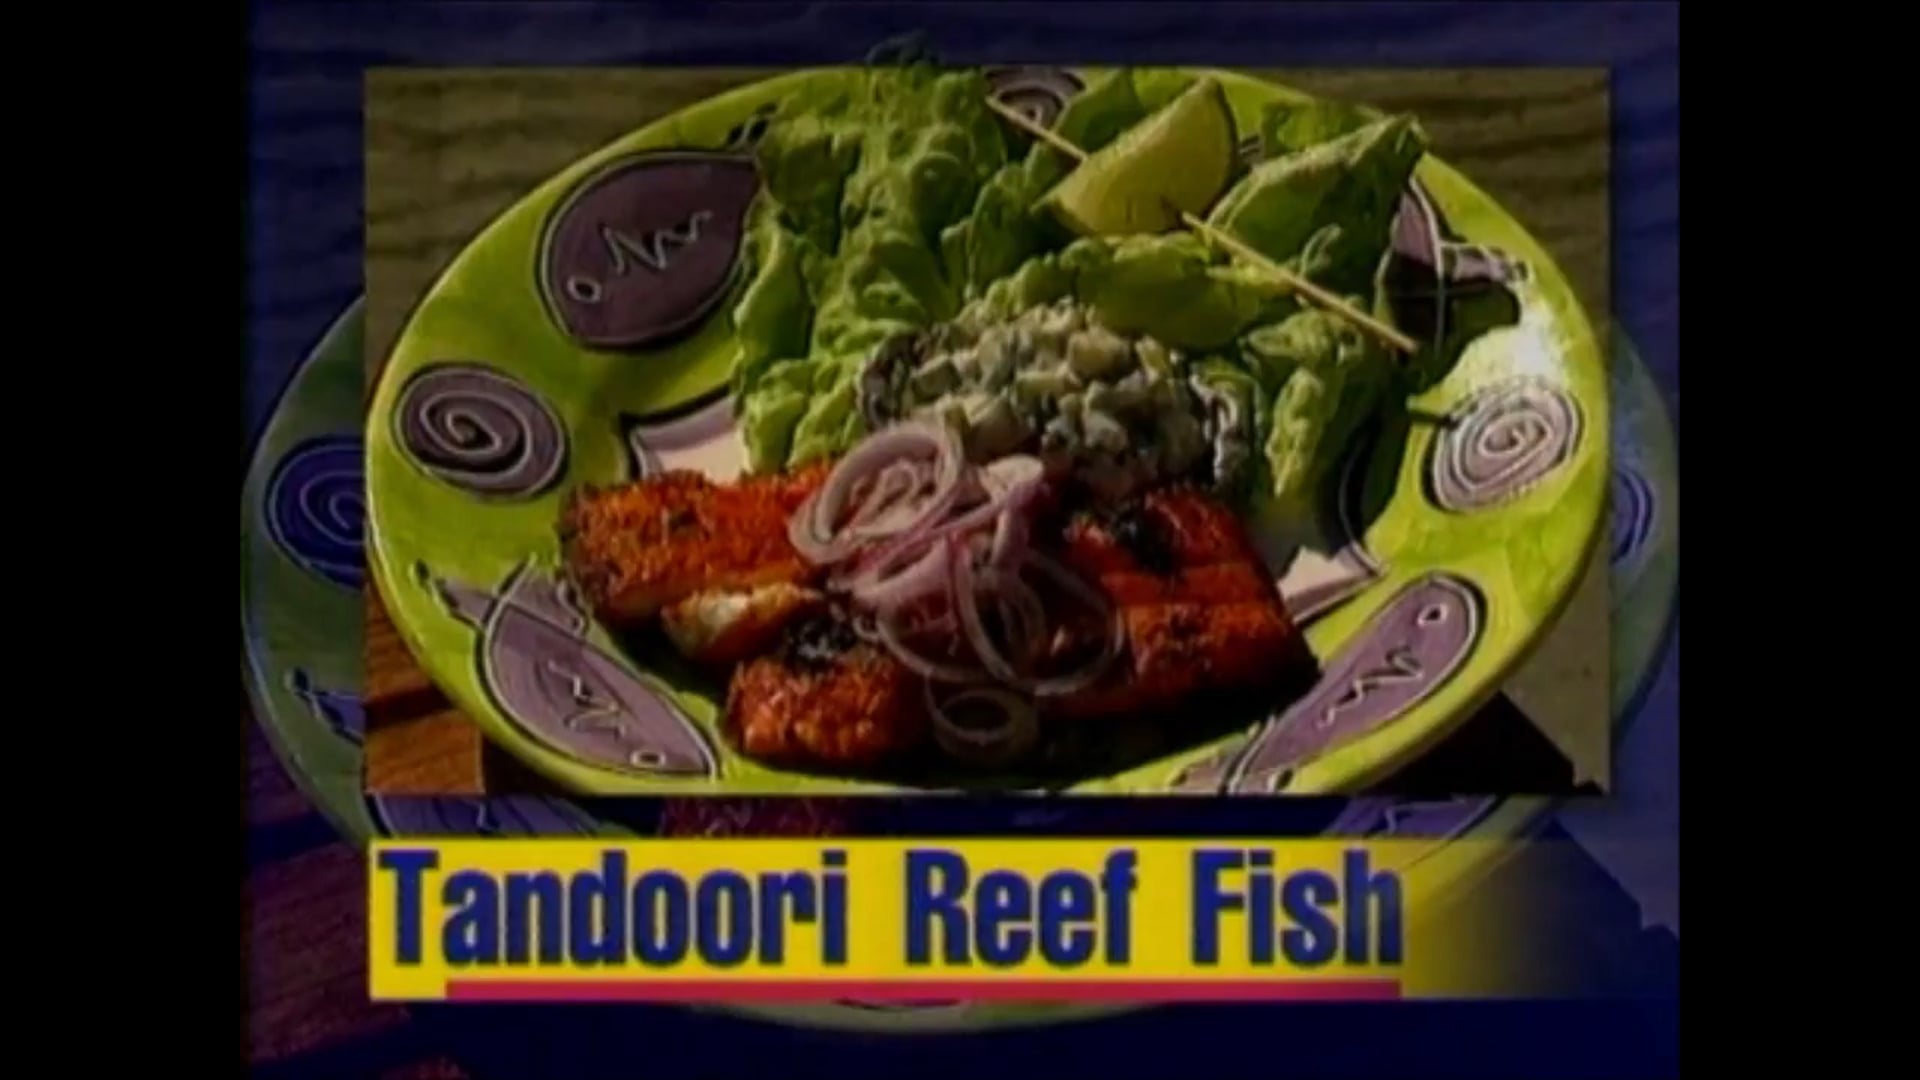 Tandoori Reef Fish